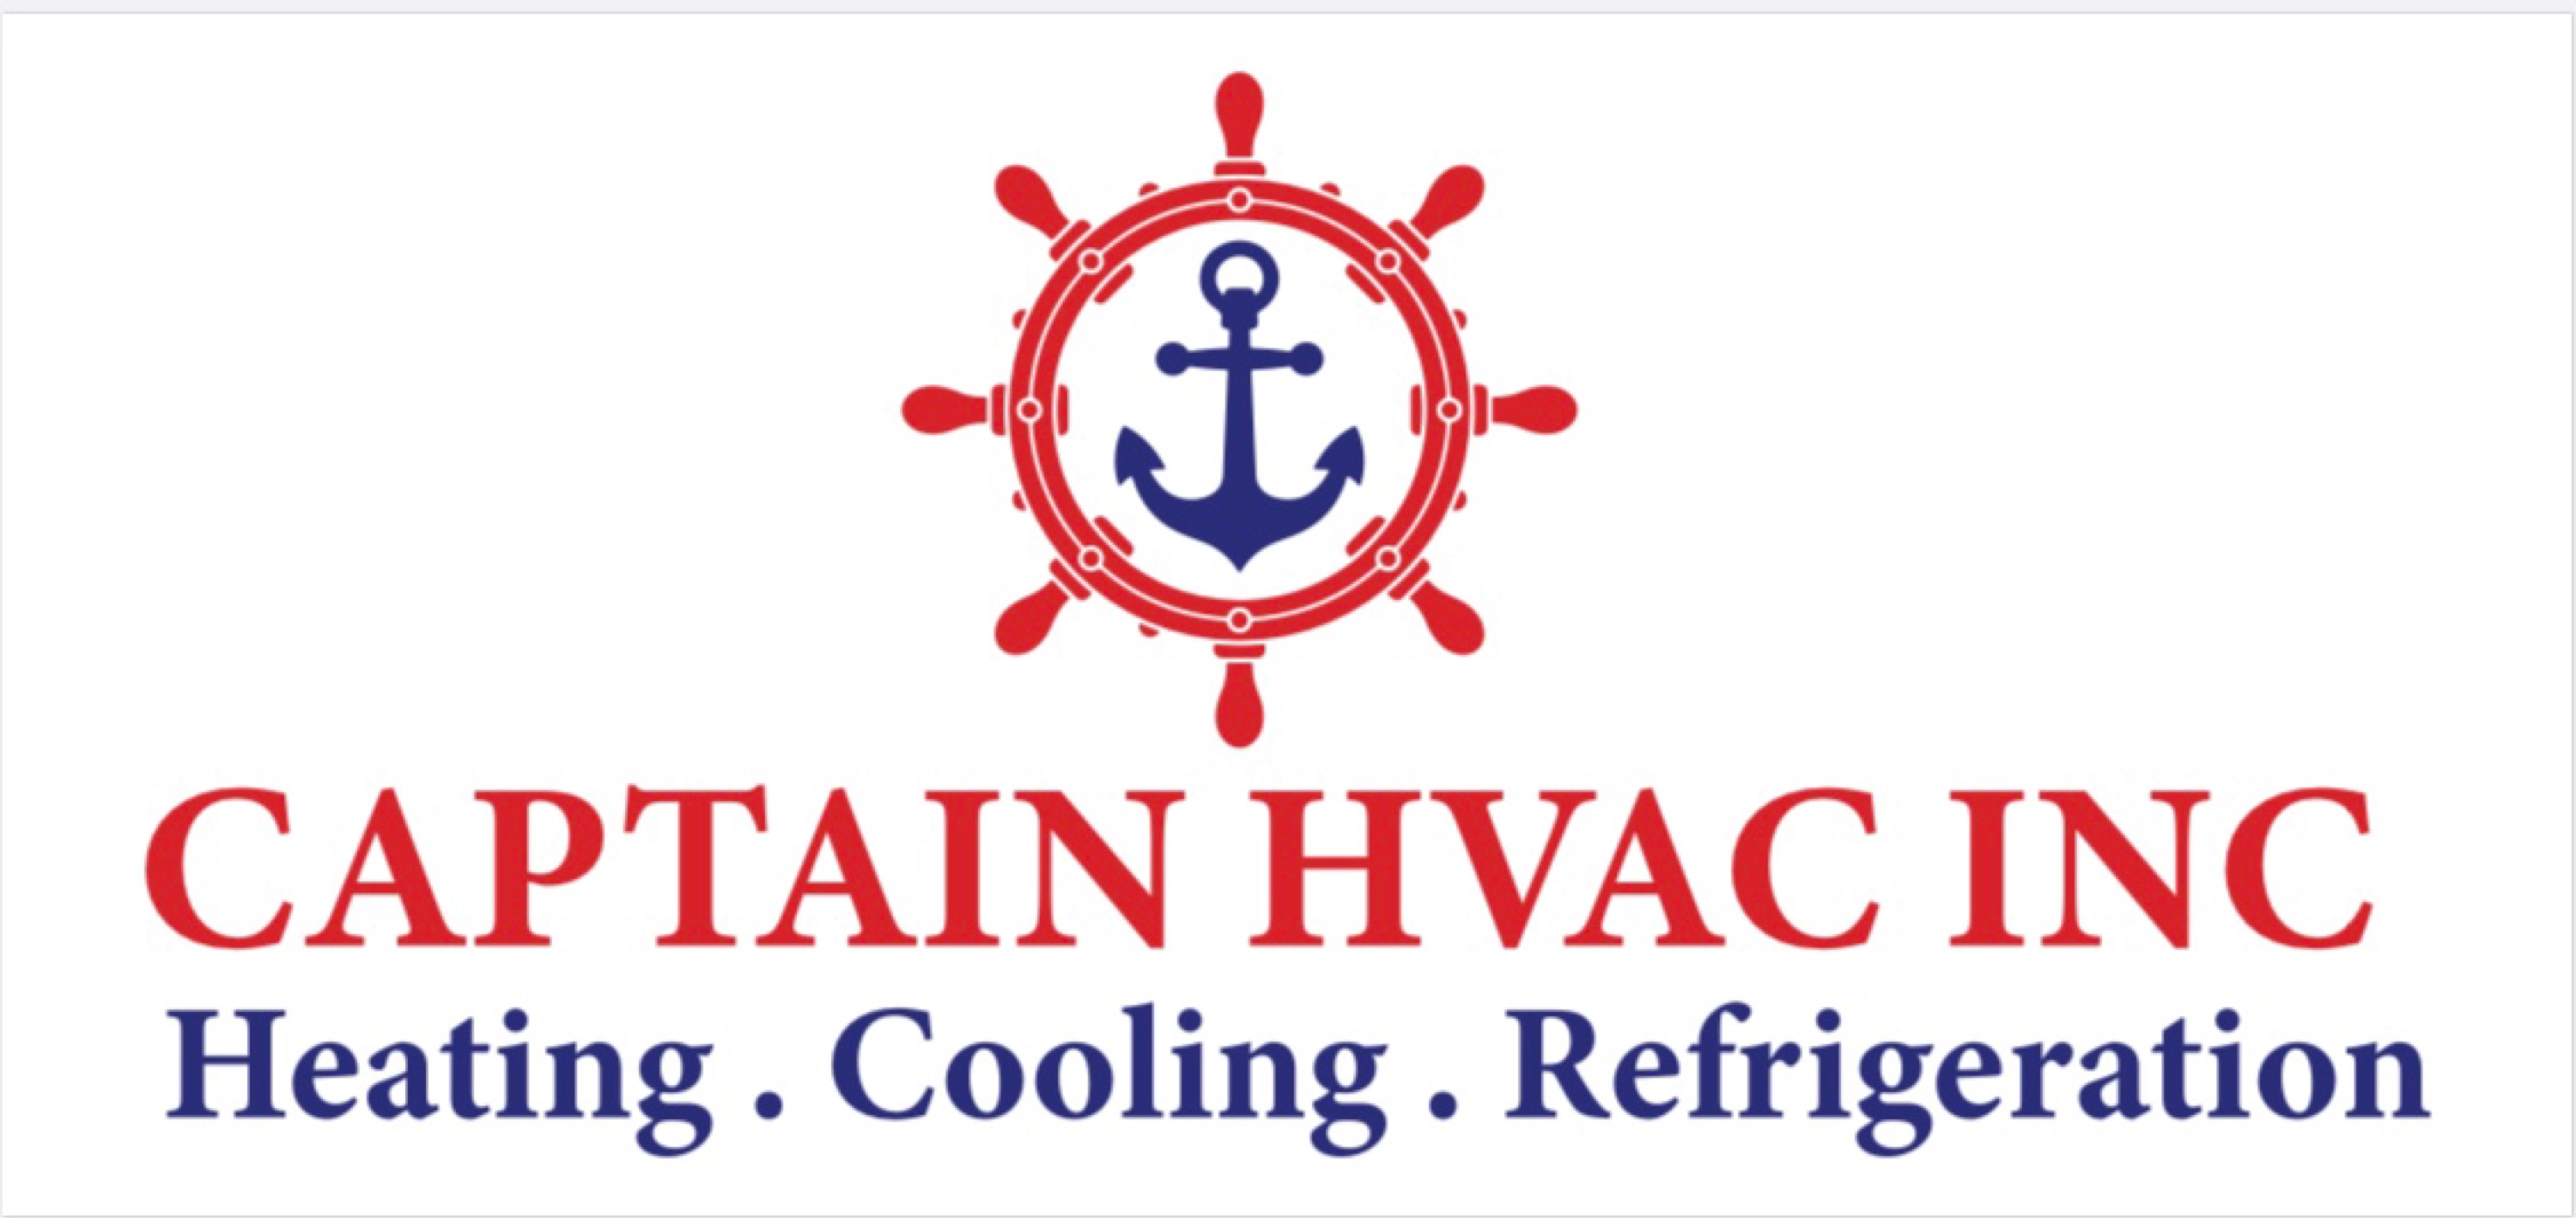 Captain hvac - Home  Facebook Logo